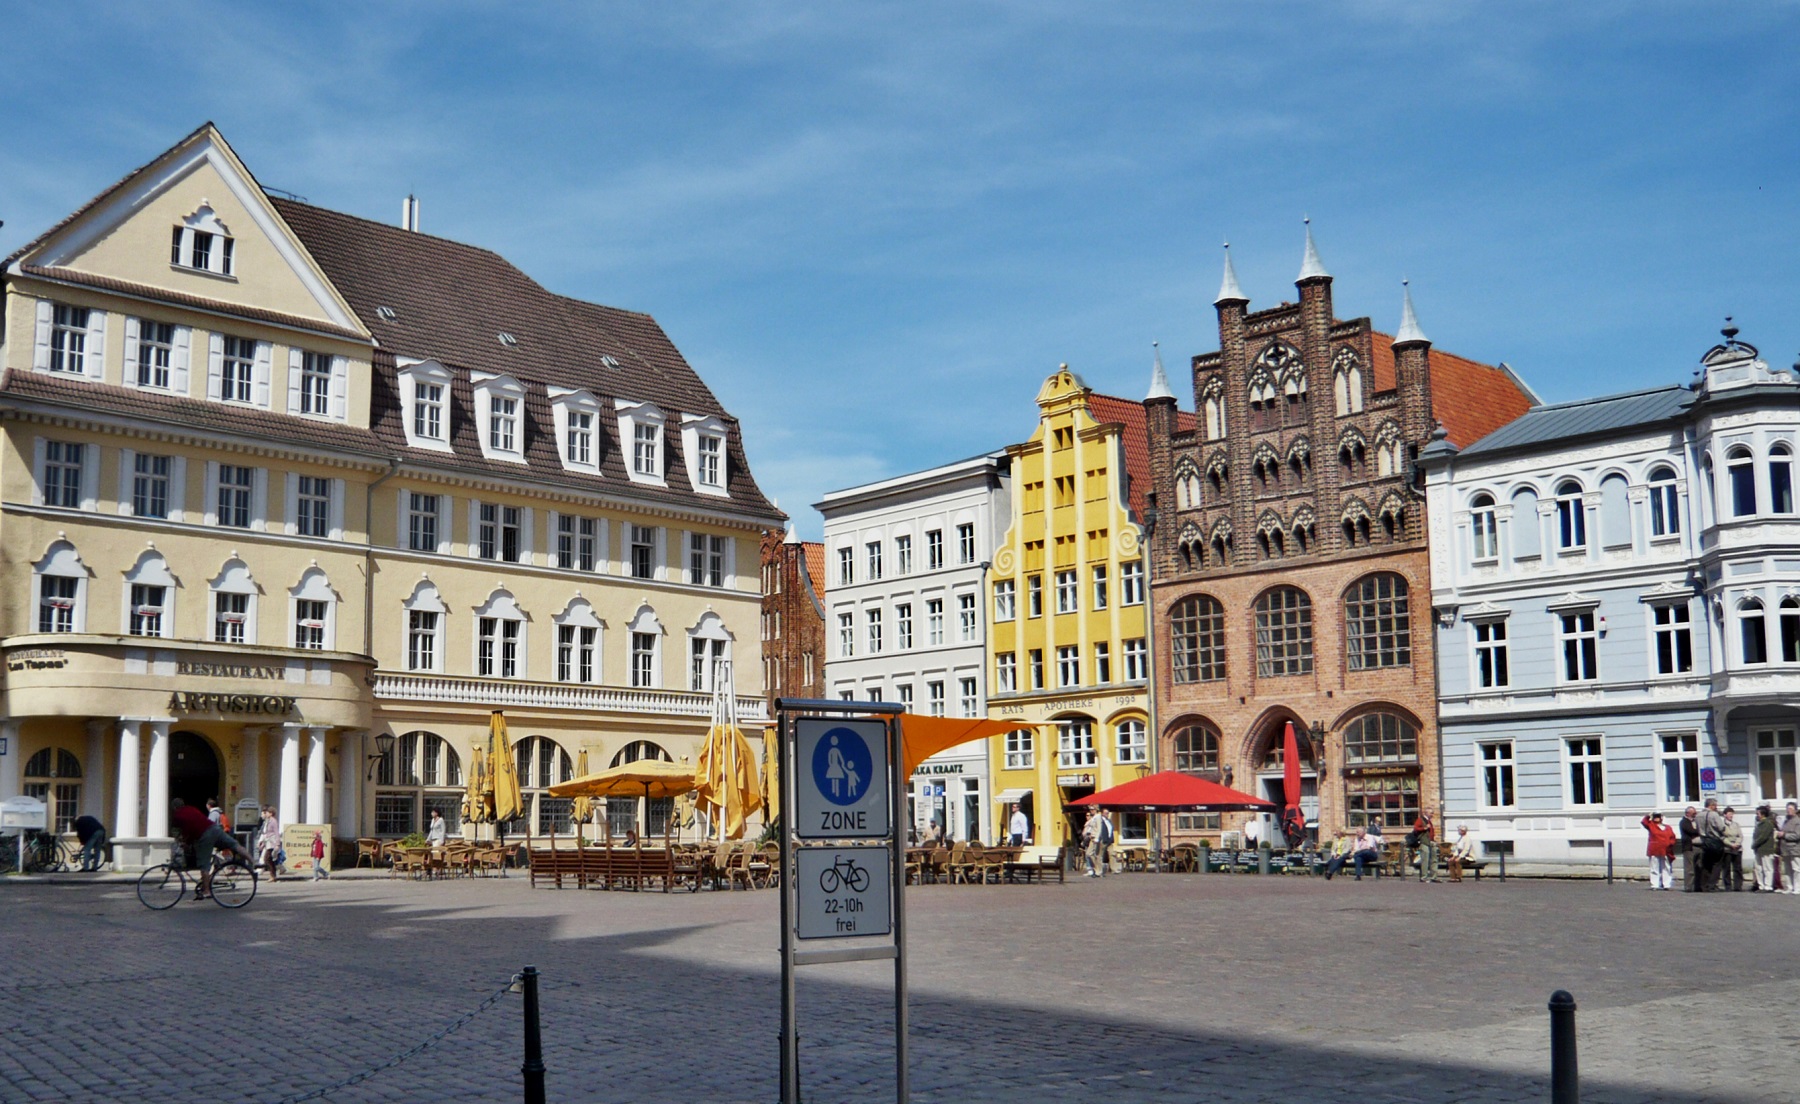 Old Market Square, Stralsund